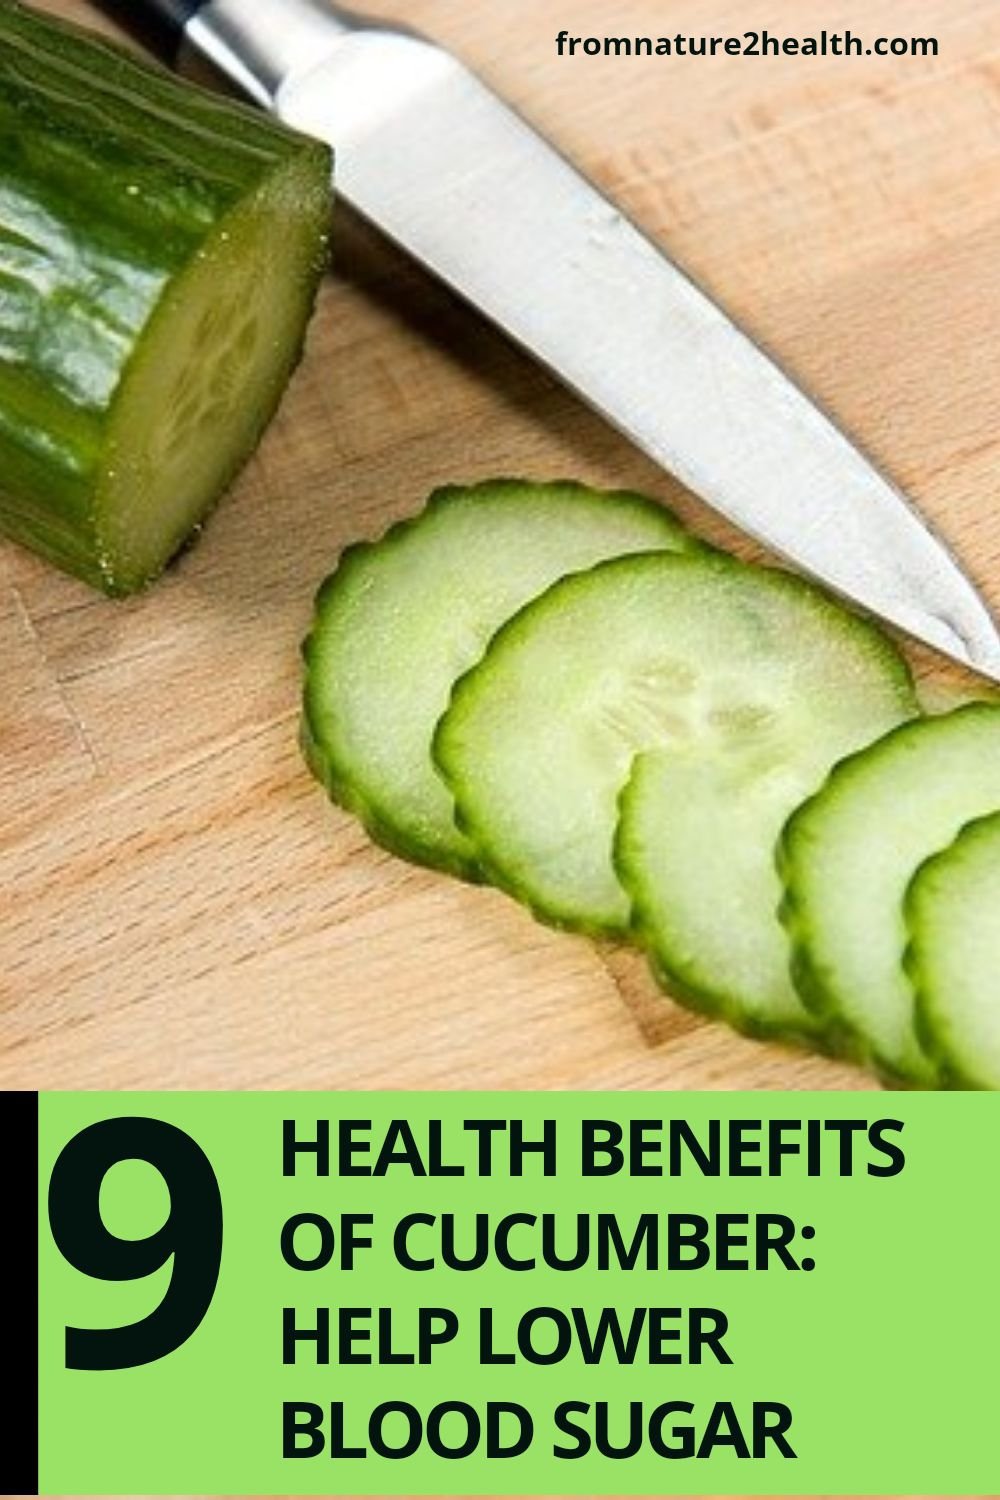 9 Health Benefits of Cucumber: Help Lower Blood Sugar